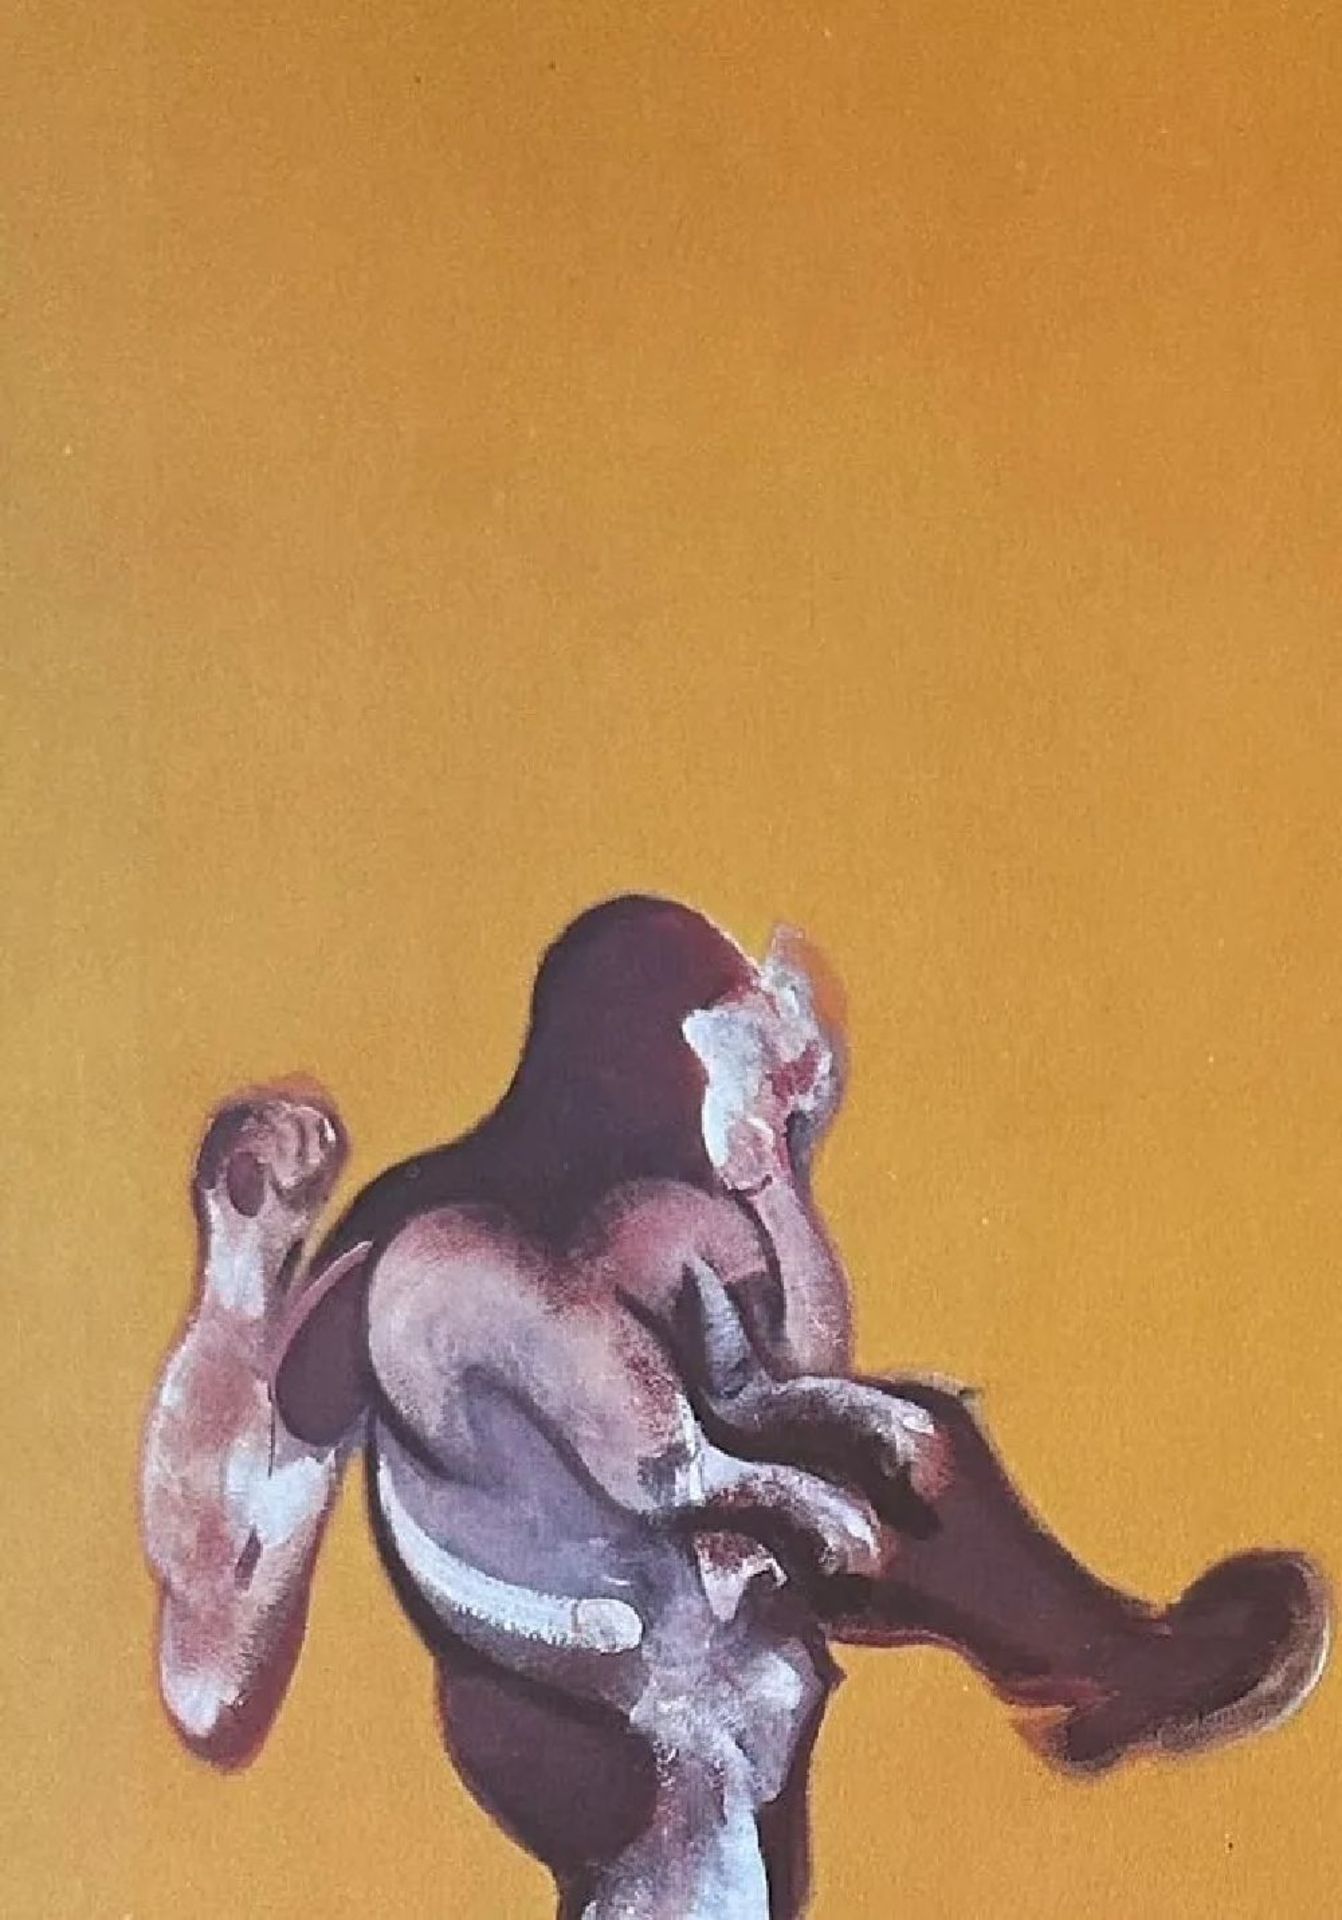 Francis Bacon "1968" Print - Image 2 of 5